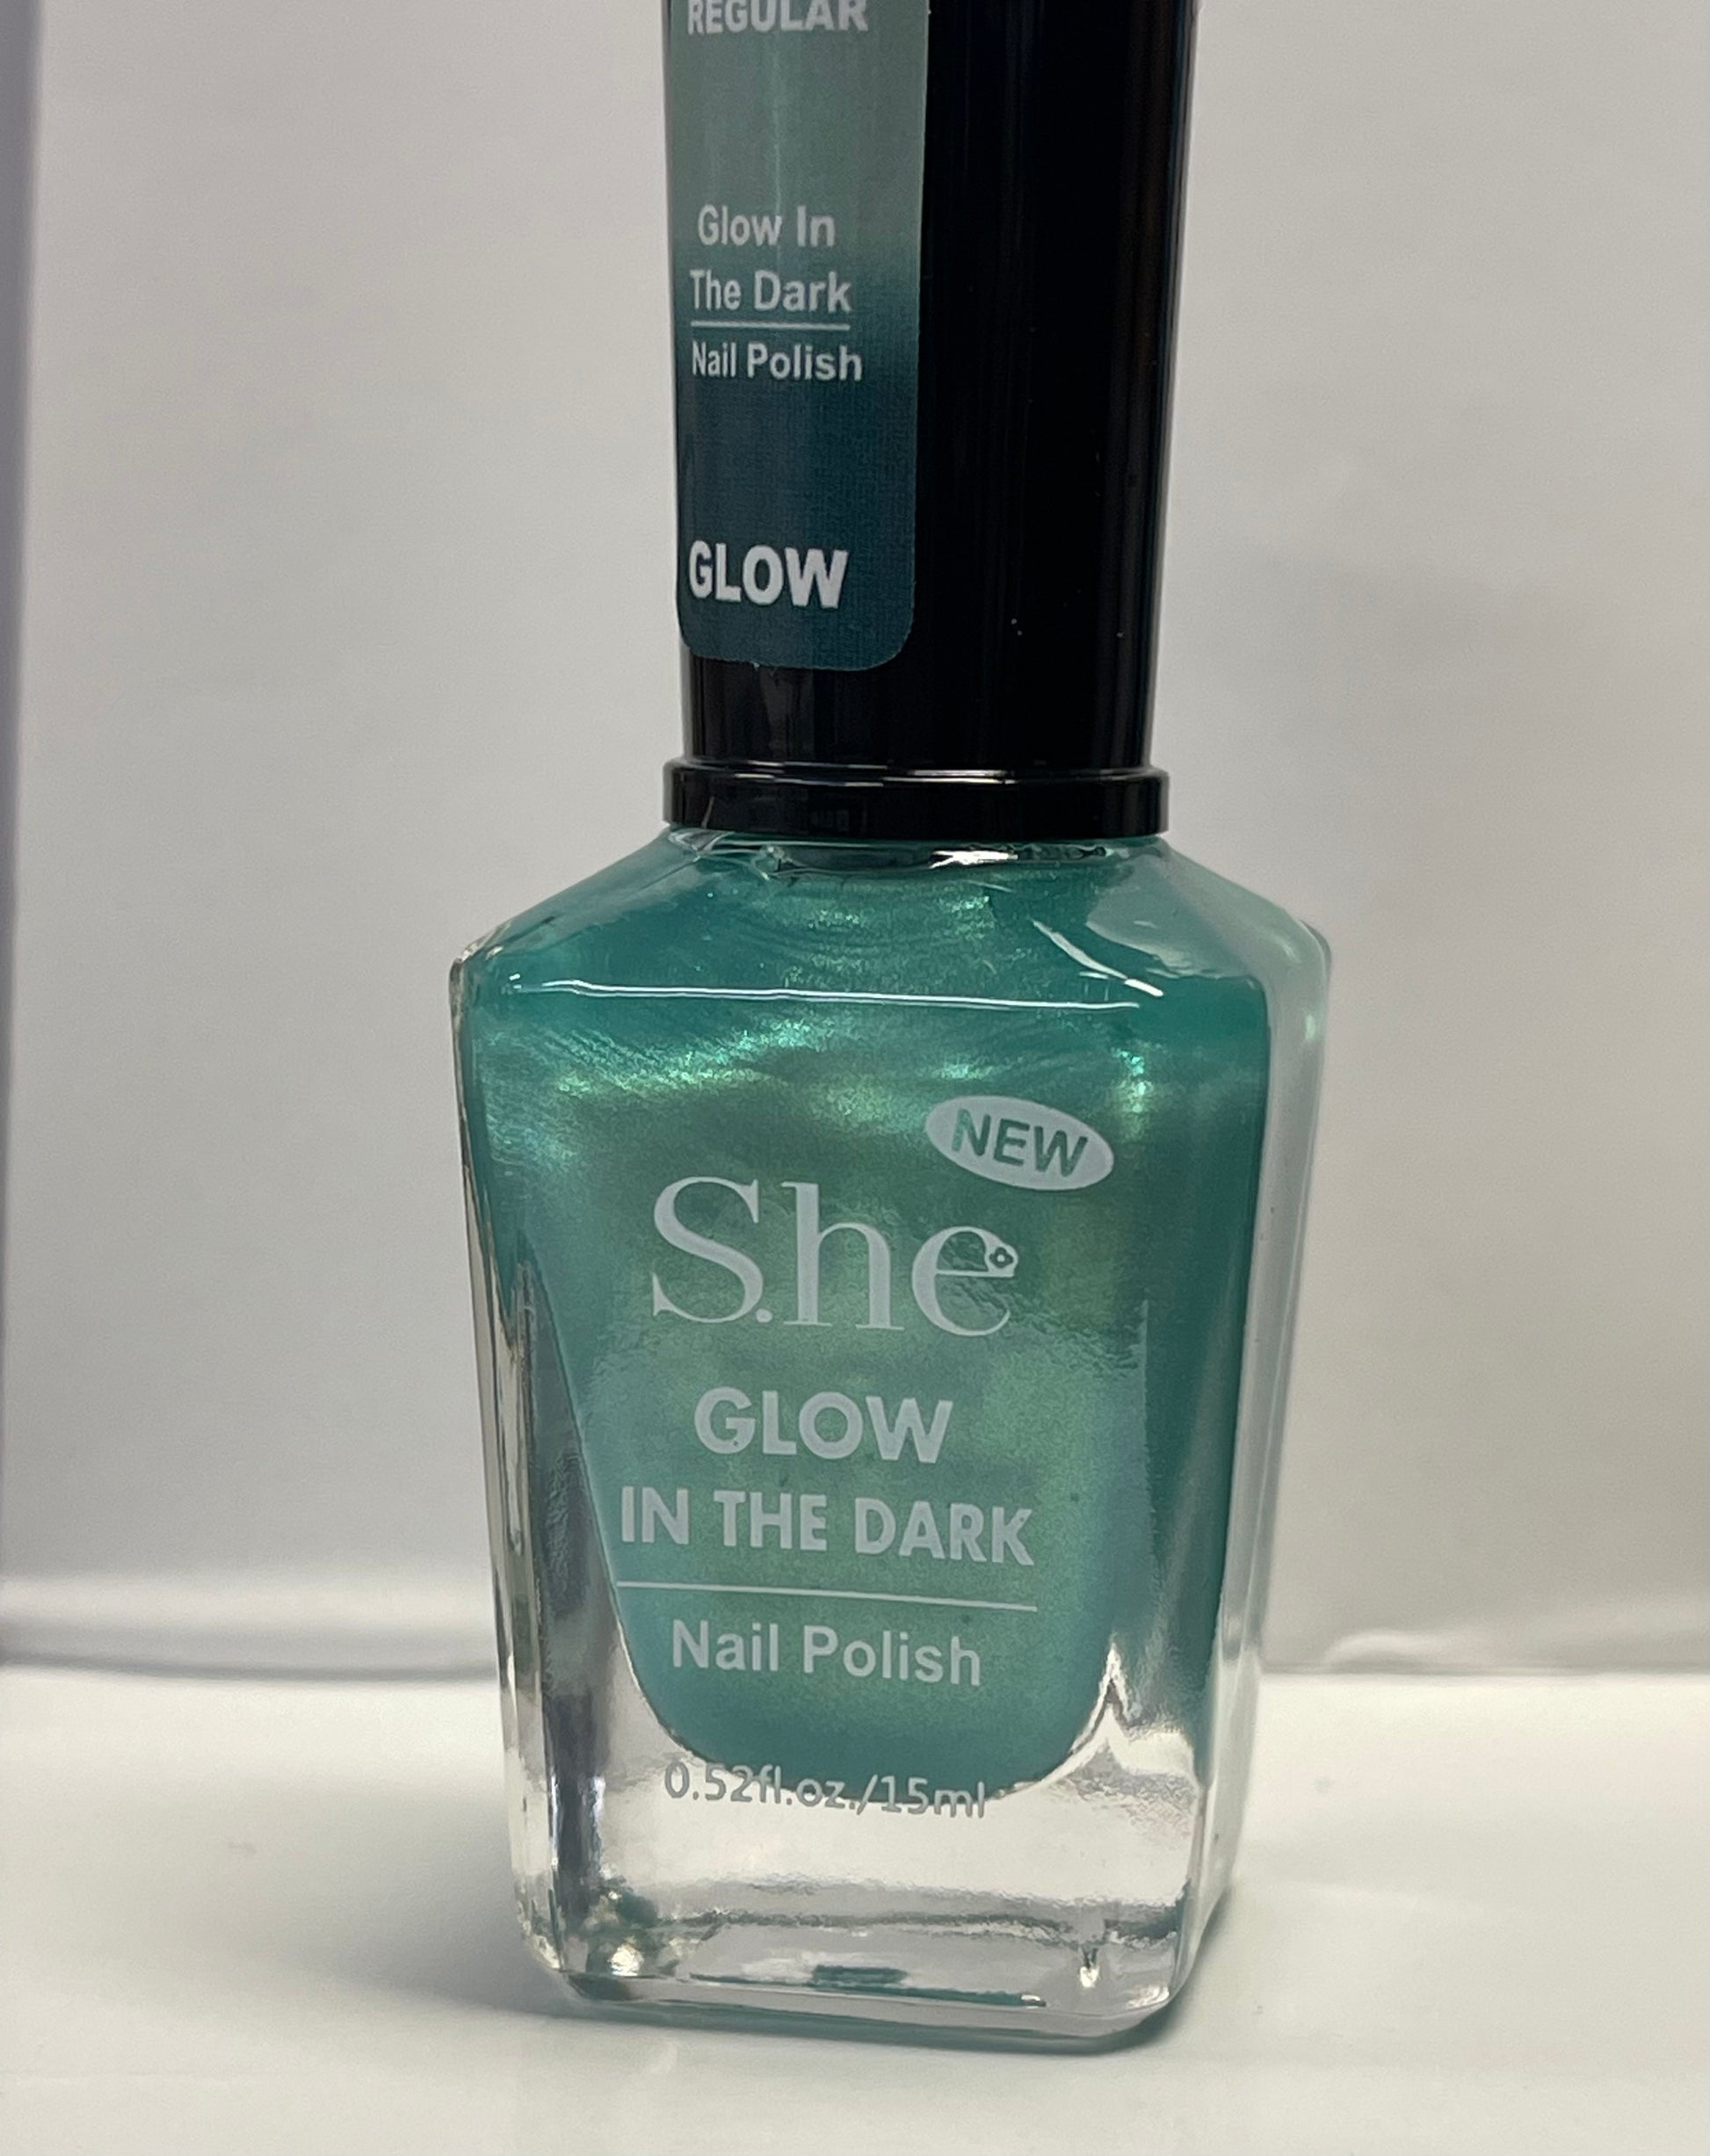 Glow in the dar nail polish (aquamarine) - Tam's Natural Solutions